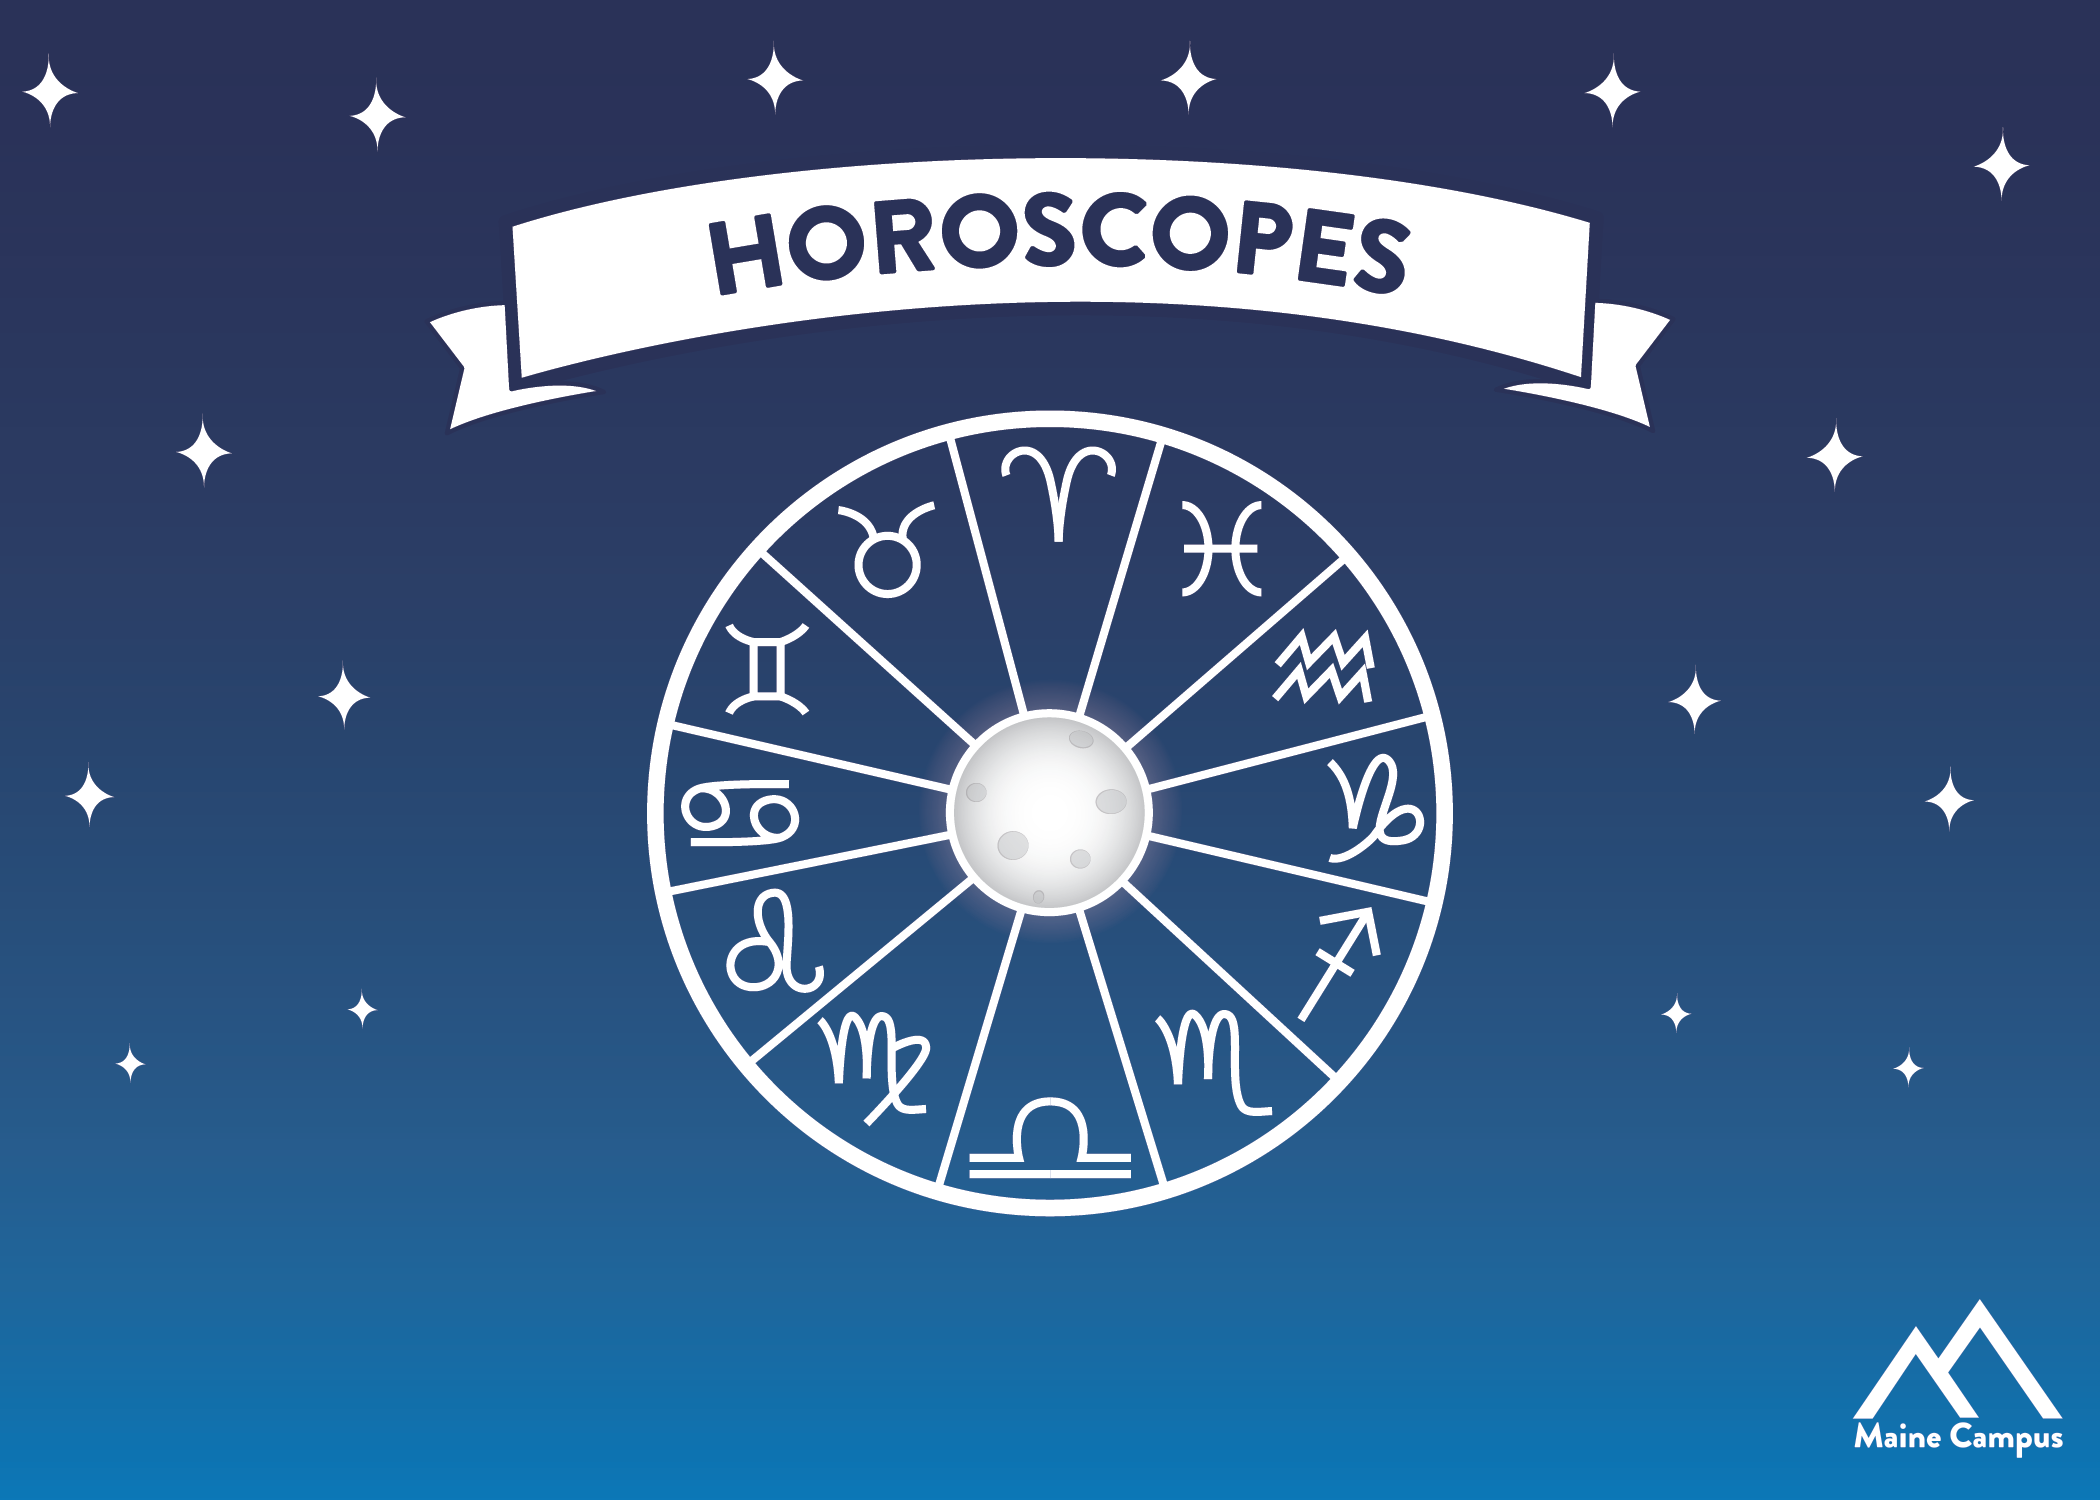 Horoscopes 9.19 to 9.25 – The Maine Campus